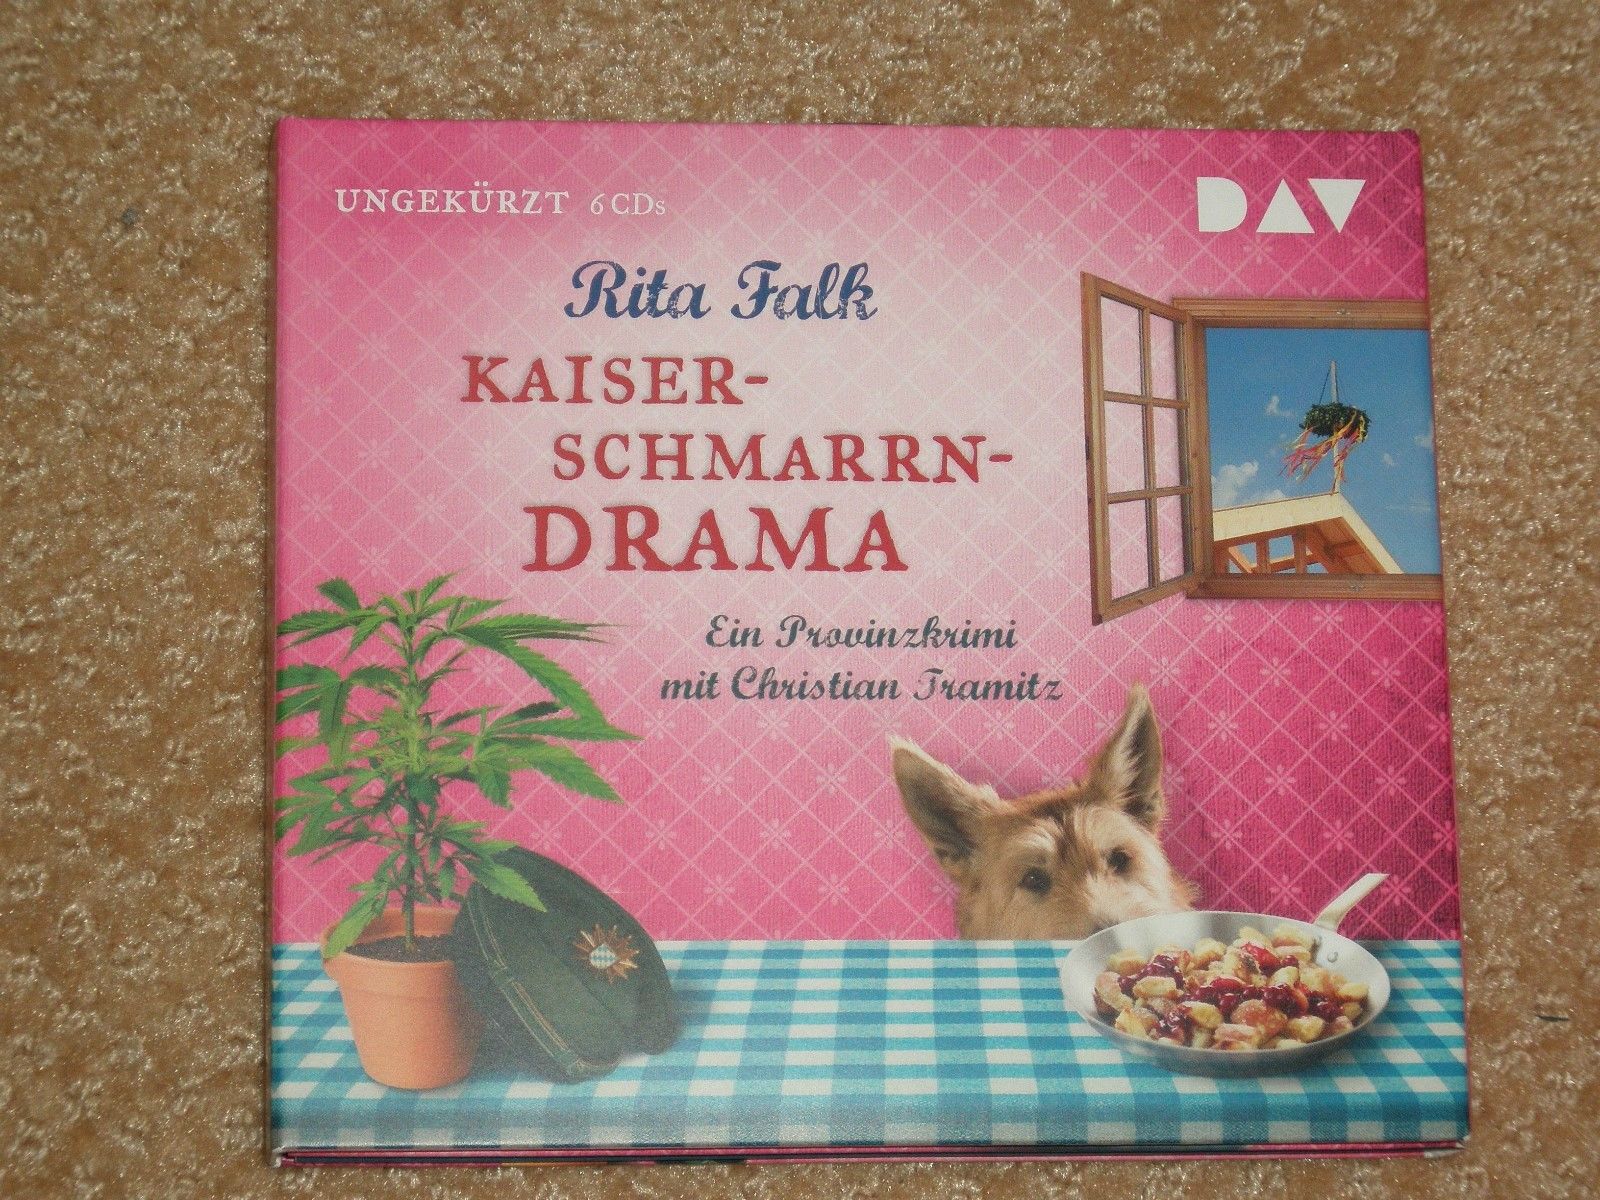 Kaiserschmarrndrama von Rita Falk (2018) Hörbuch 1x gehört Christian Tramnitz